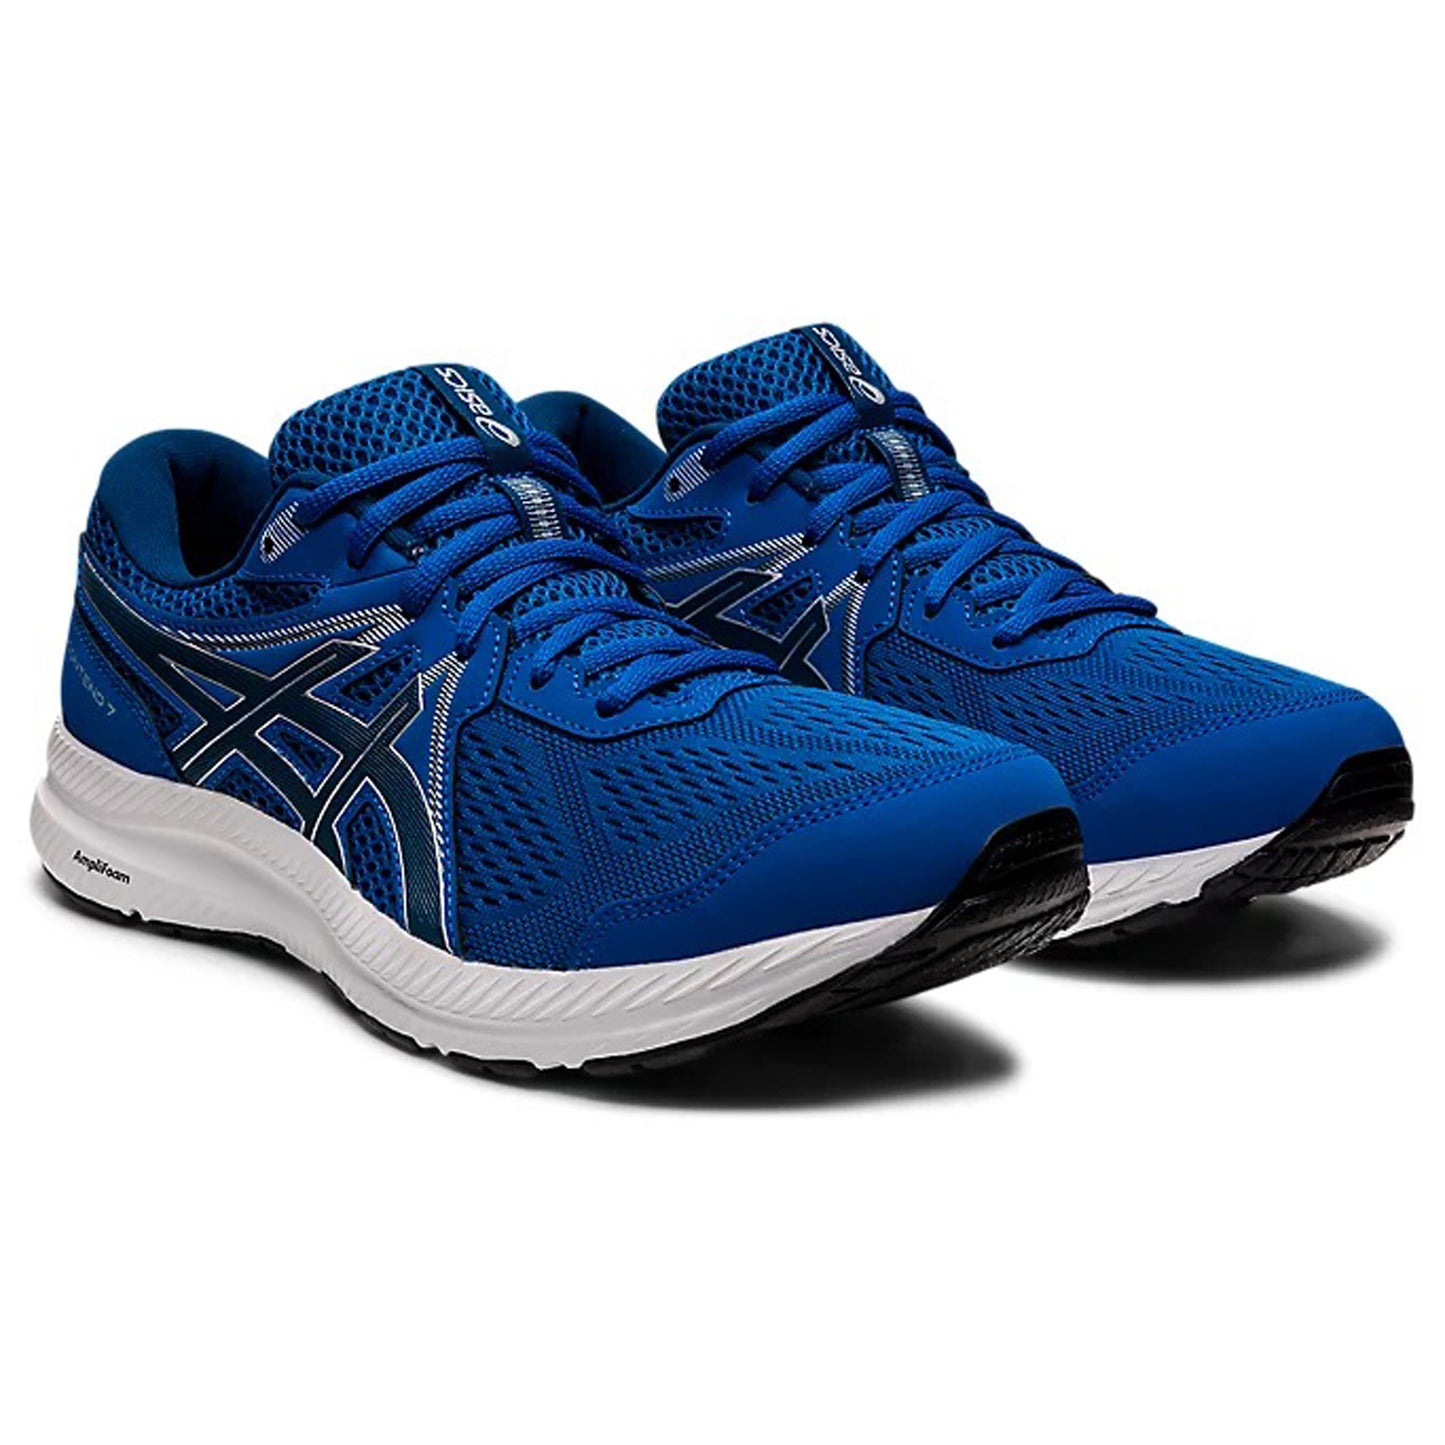 Asics GEL-CONTEND 7 Men's Running Shoes, Lake Drive/Mako Blue - Best Price online Prokicksports.com